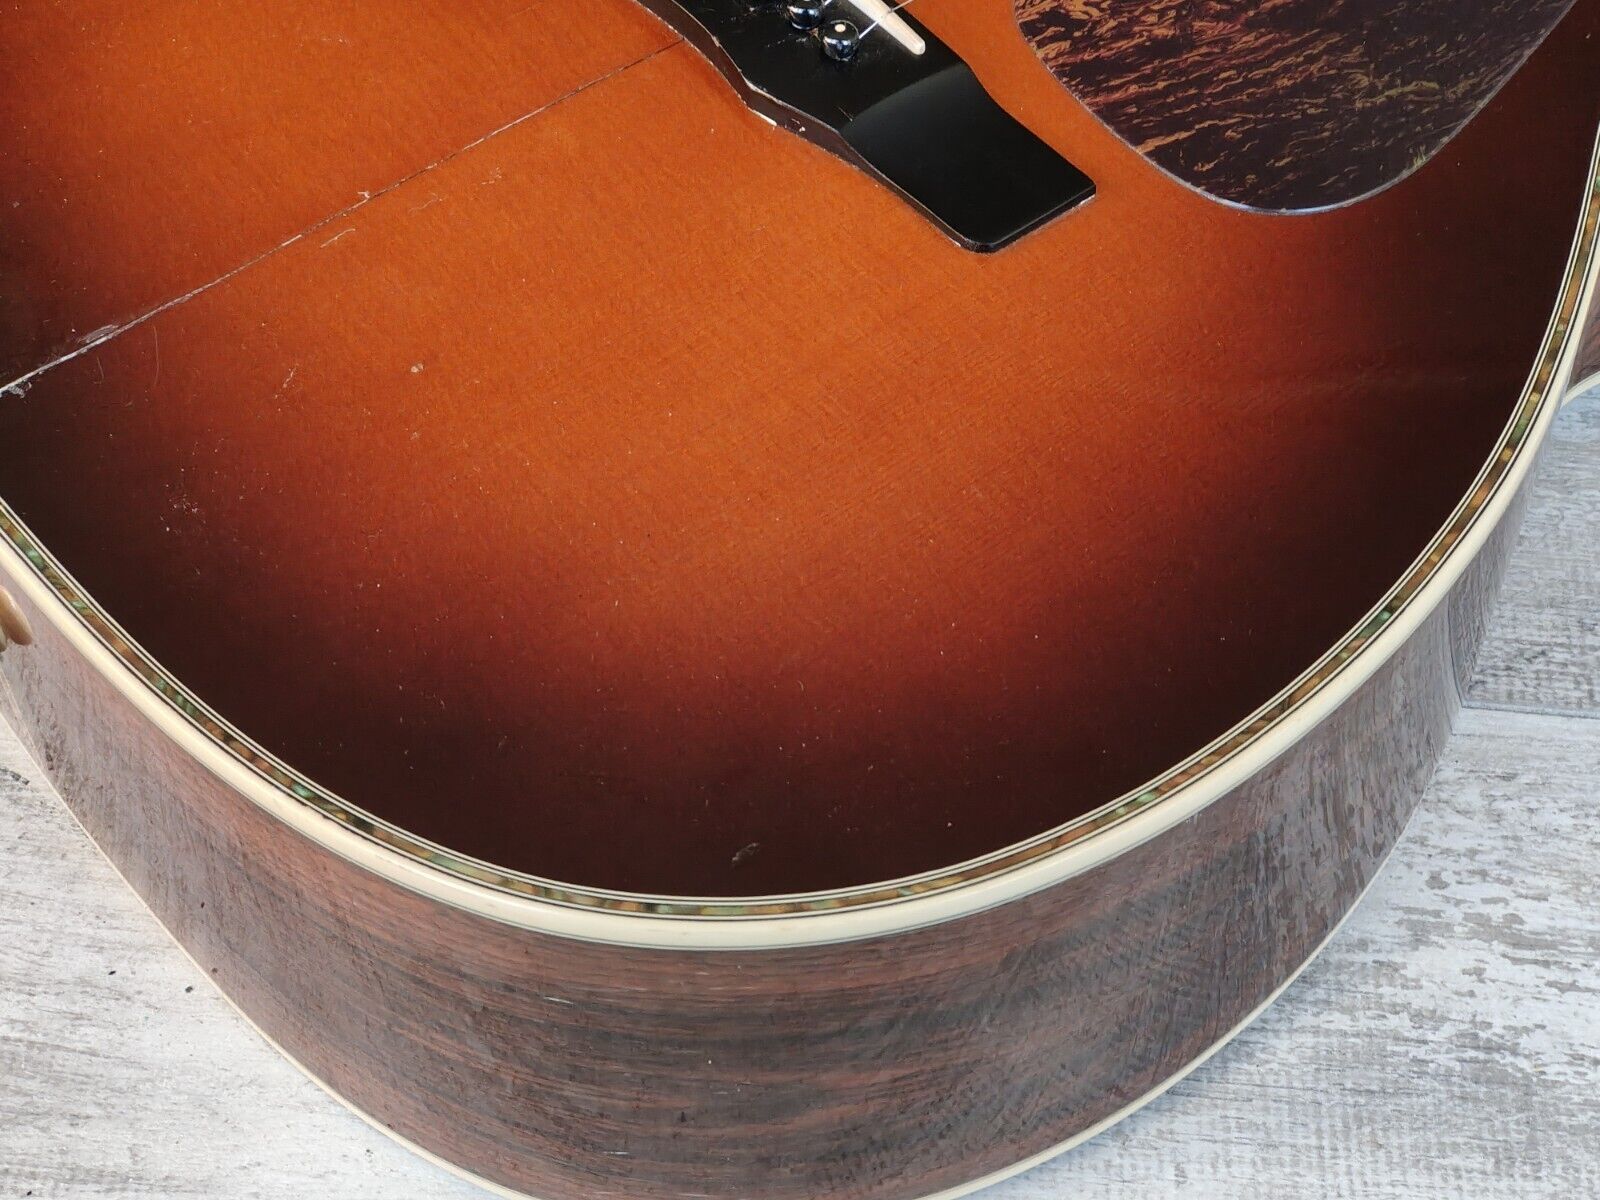 1980's Morris MF-601 Japanese Vintage Acoustic Guitar (Brown Sunburst)